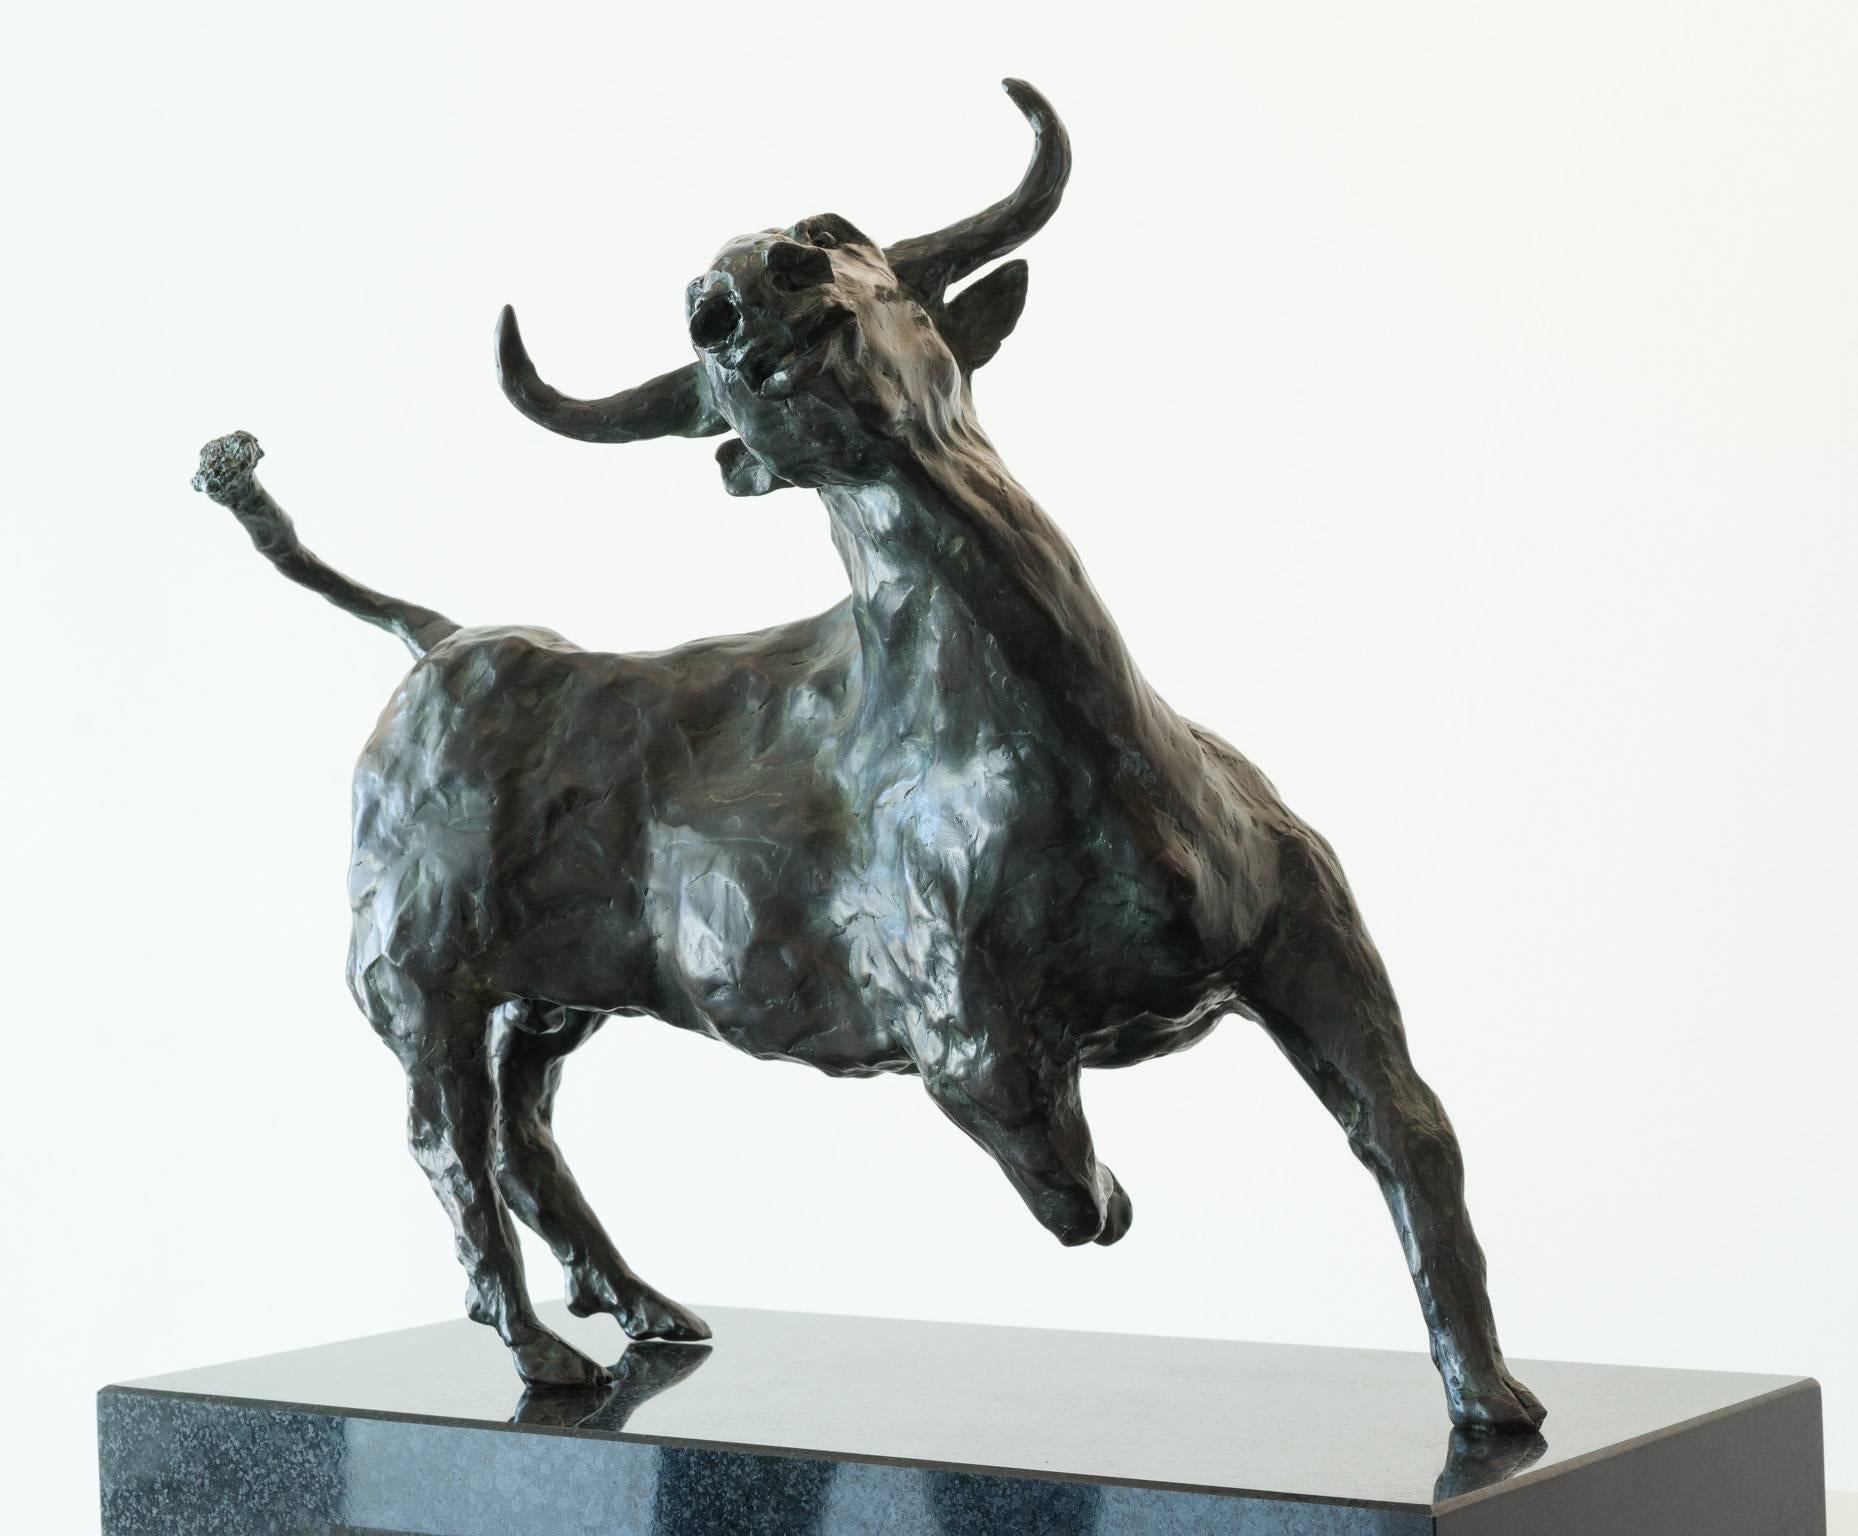 Bull - Sculpture by Don Wilks